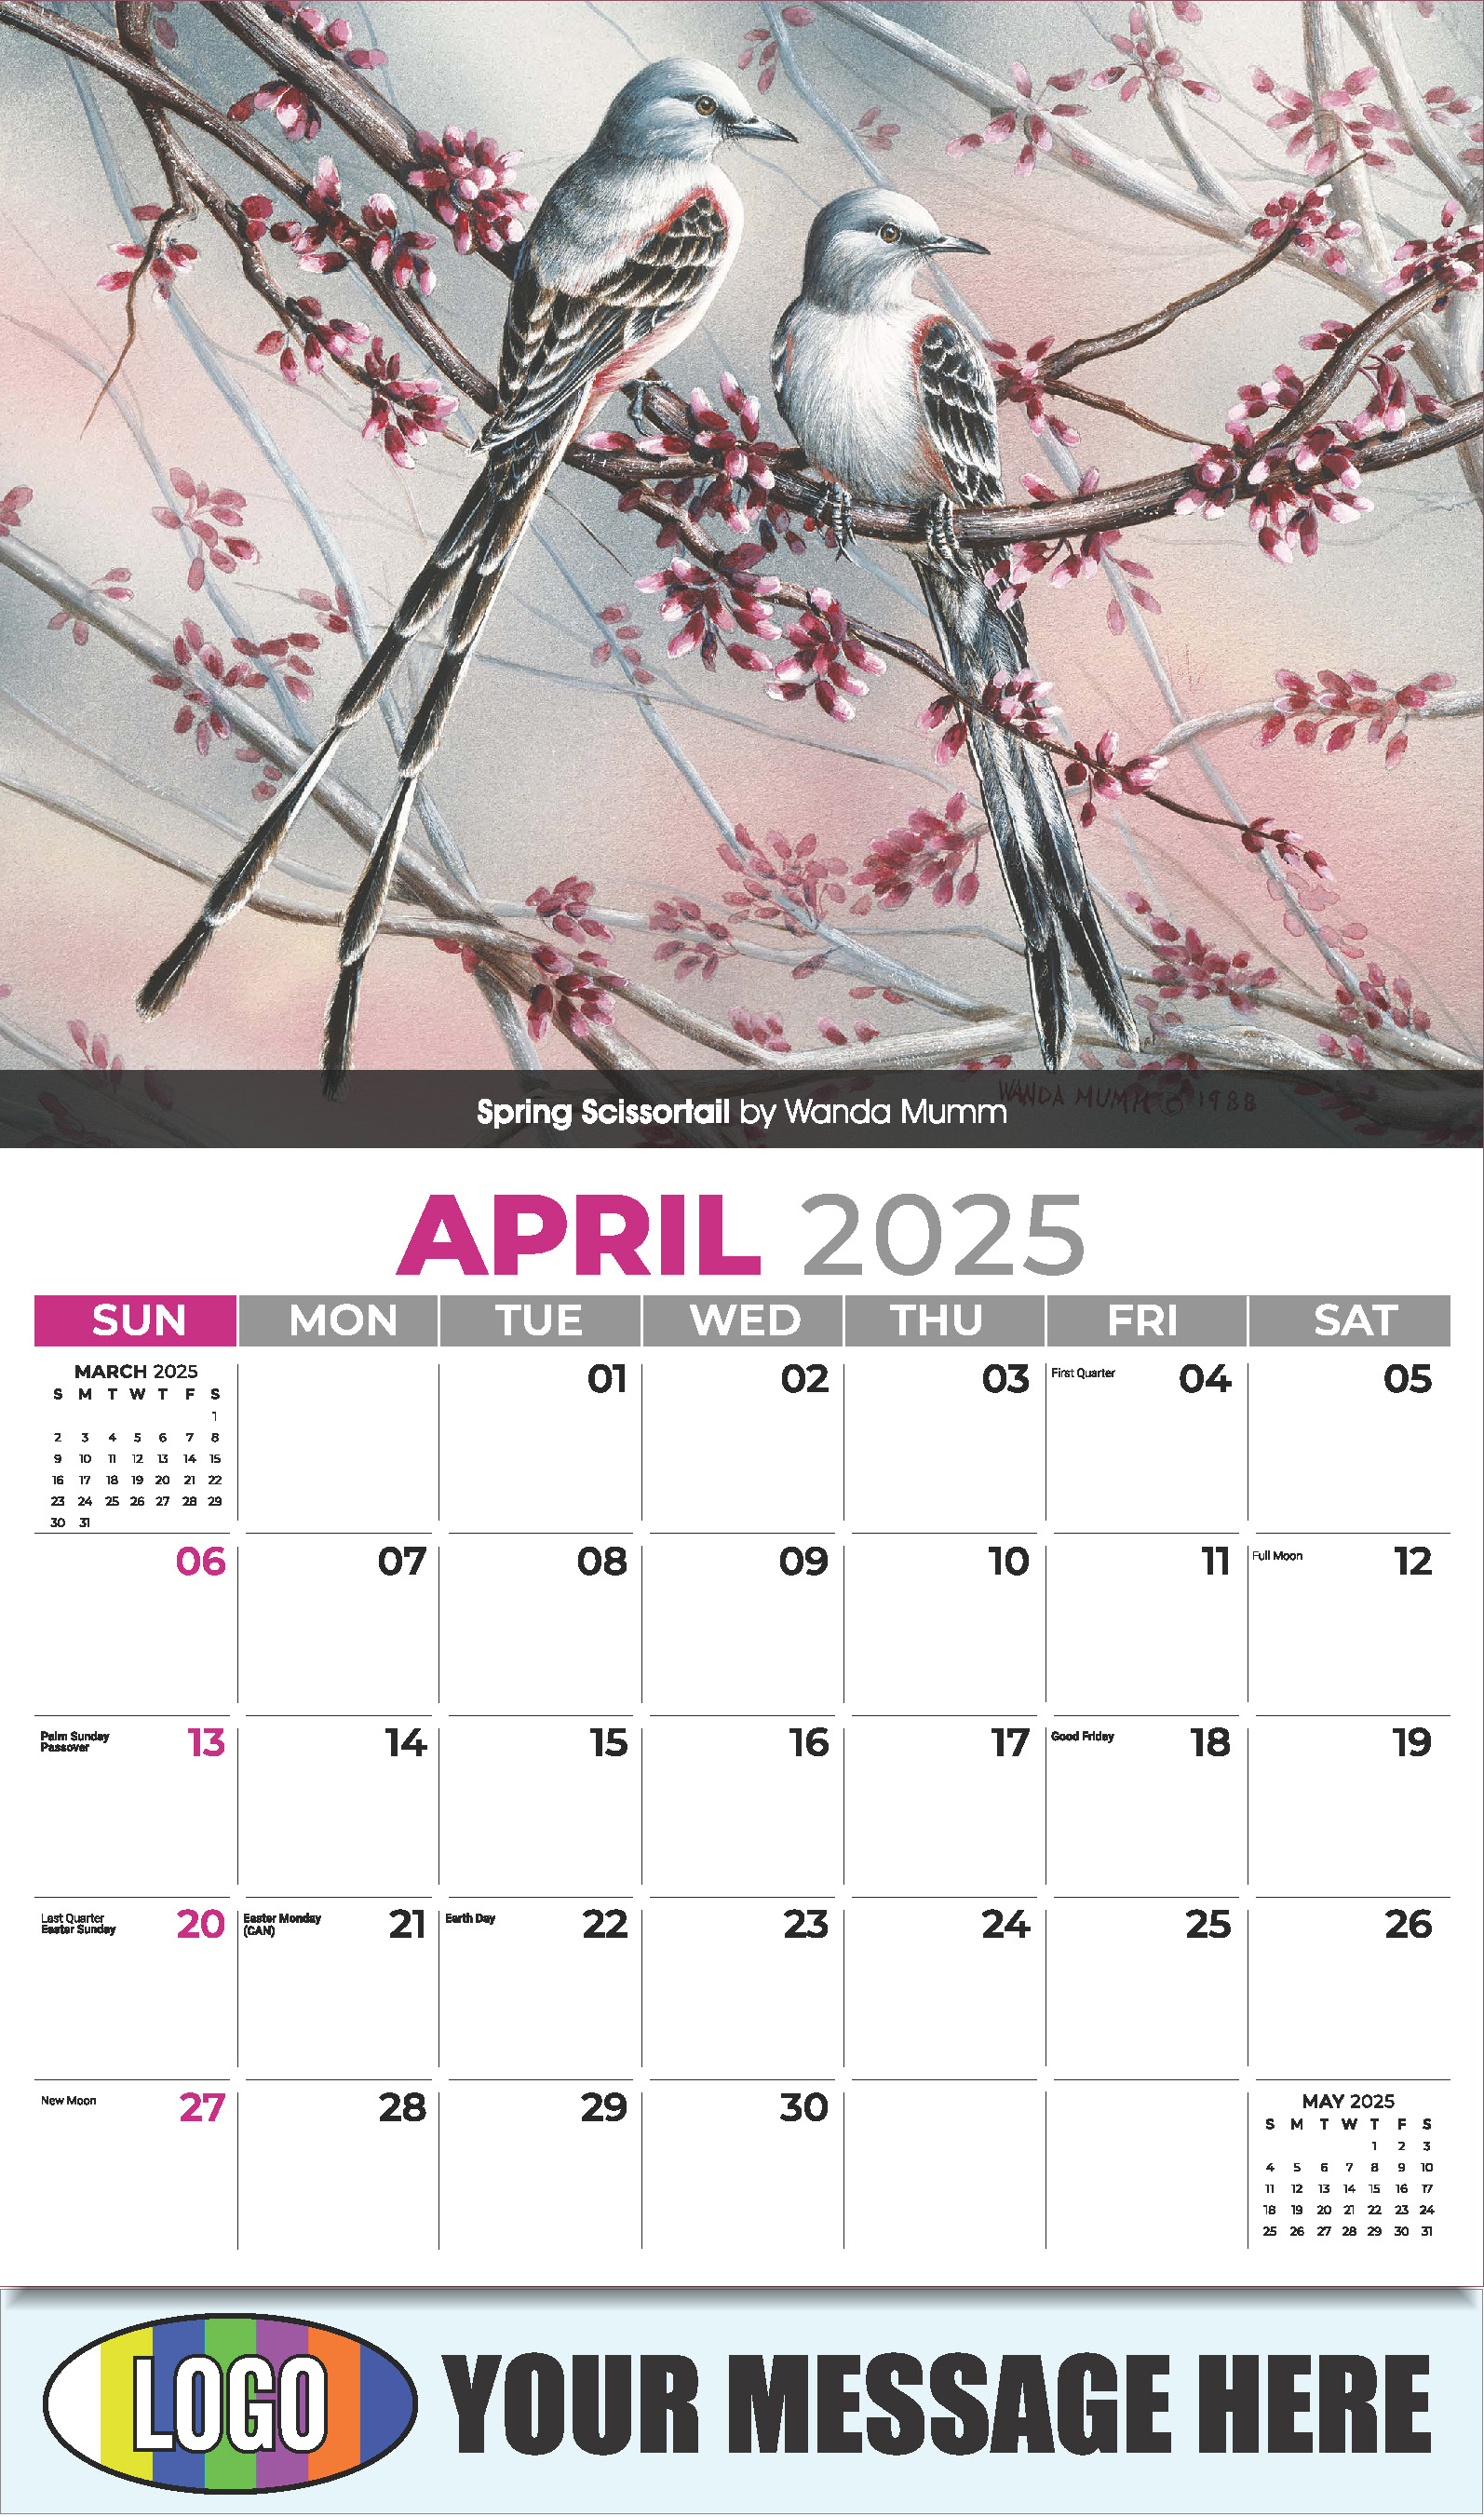 Garden Birds 2025 Business Promotional Calendar - April